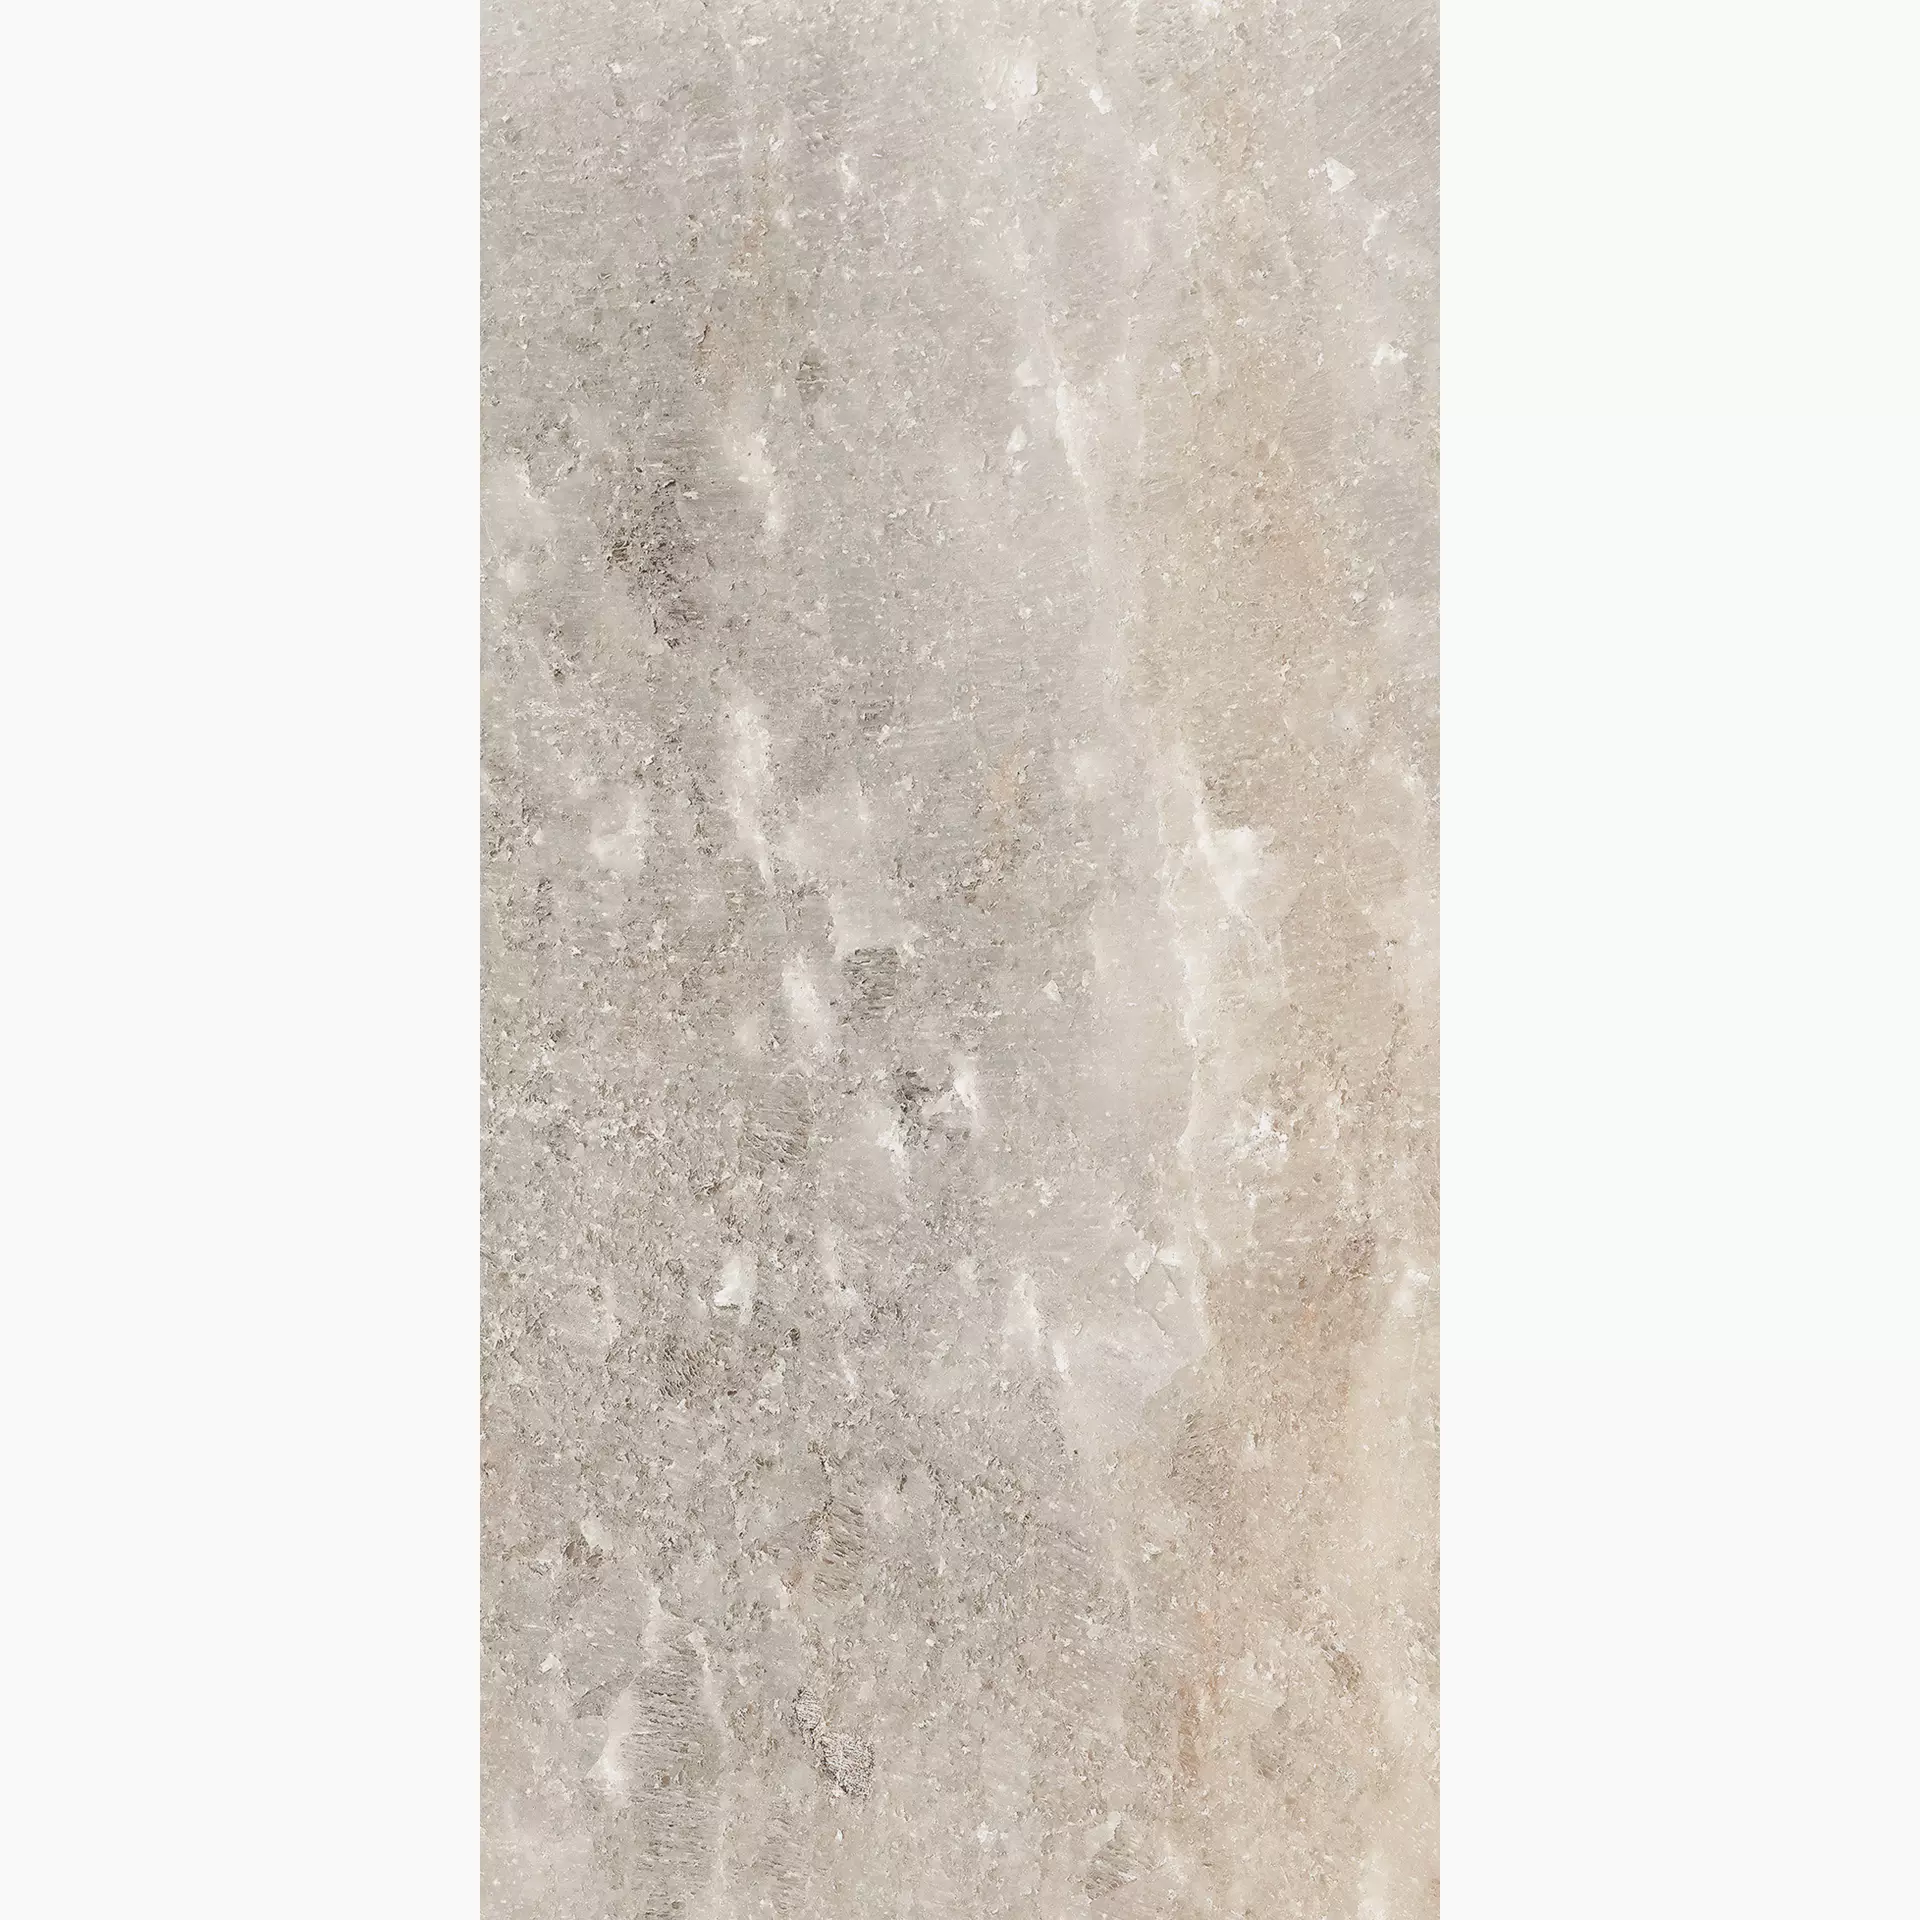 Florim Rock Salt Danish Smoke Naturale – Matt 765910 30x60cm rectified 9mm